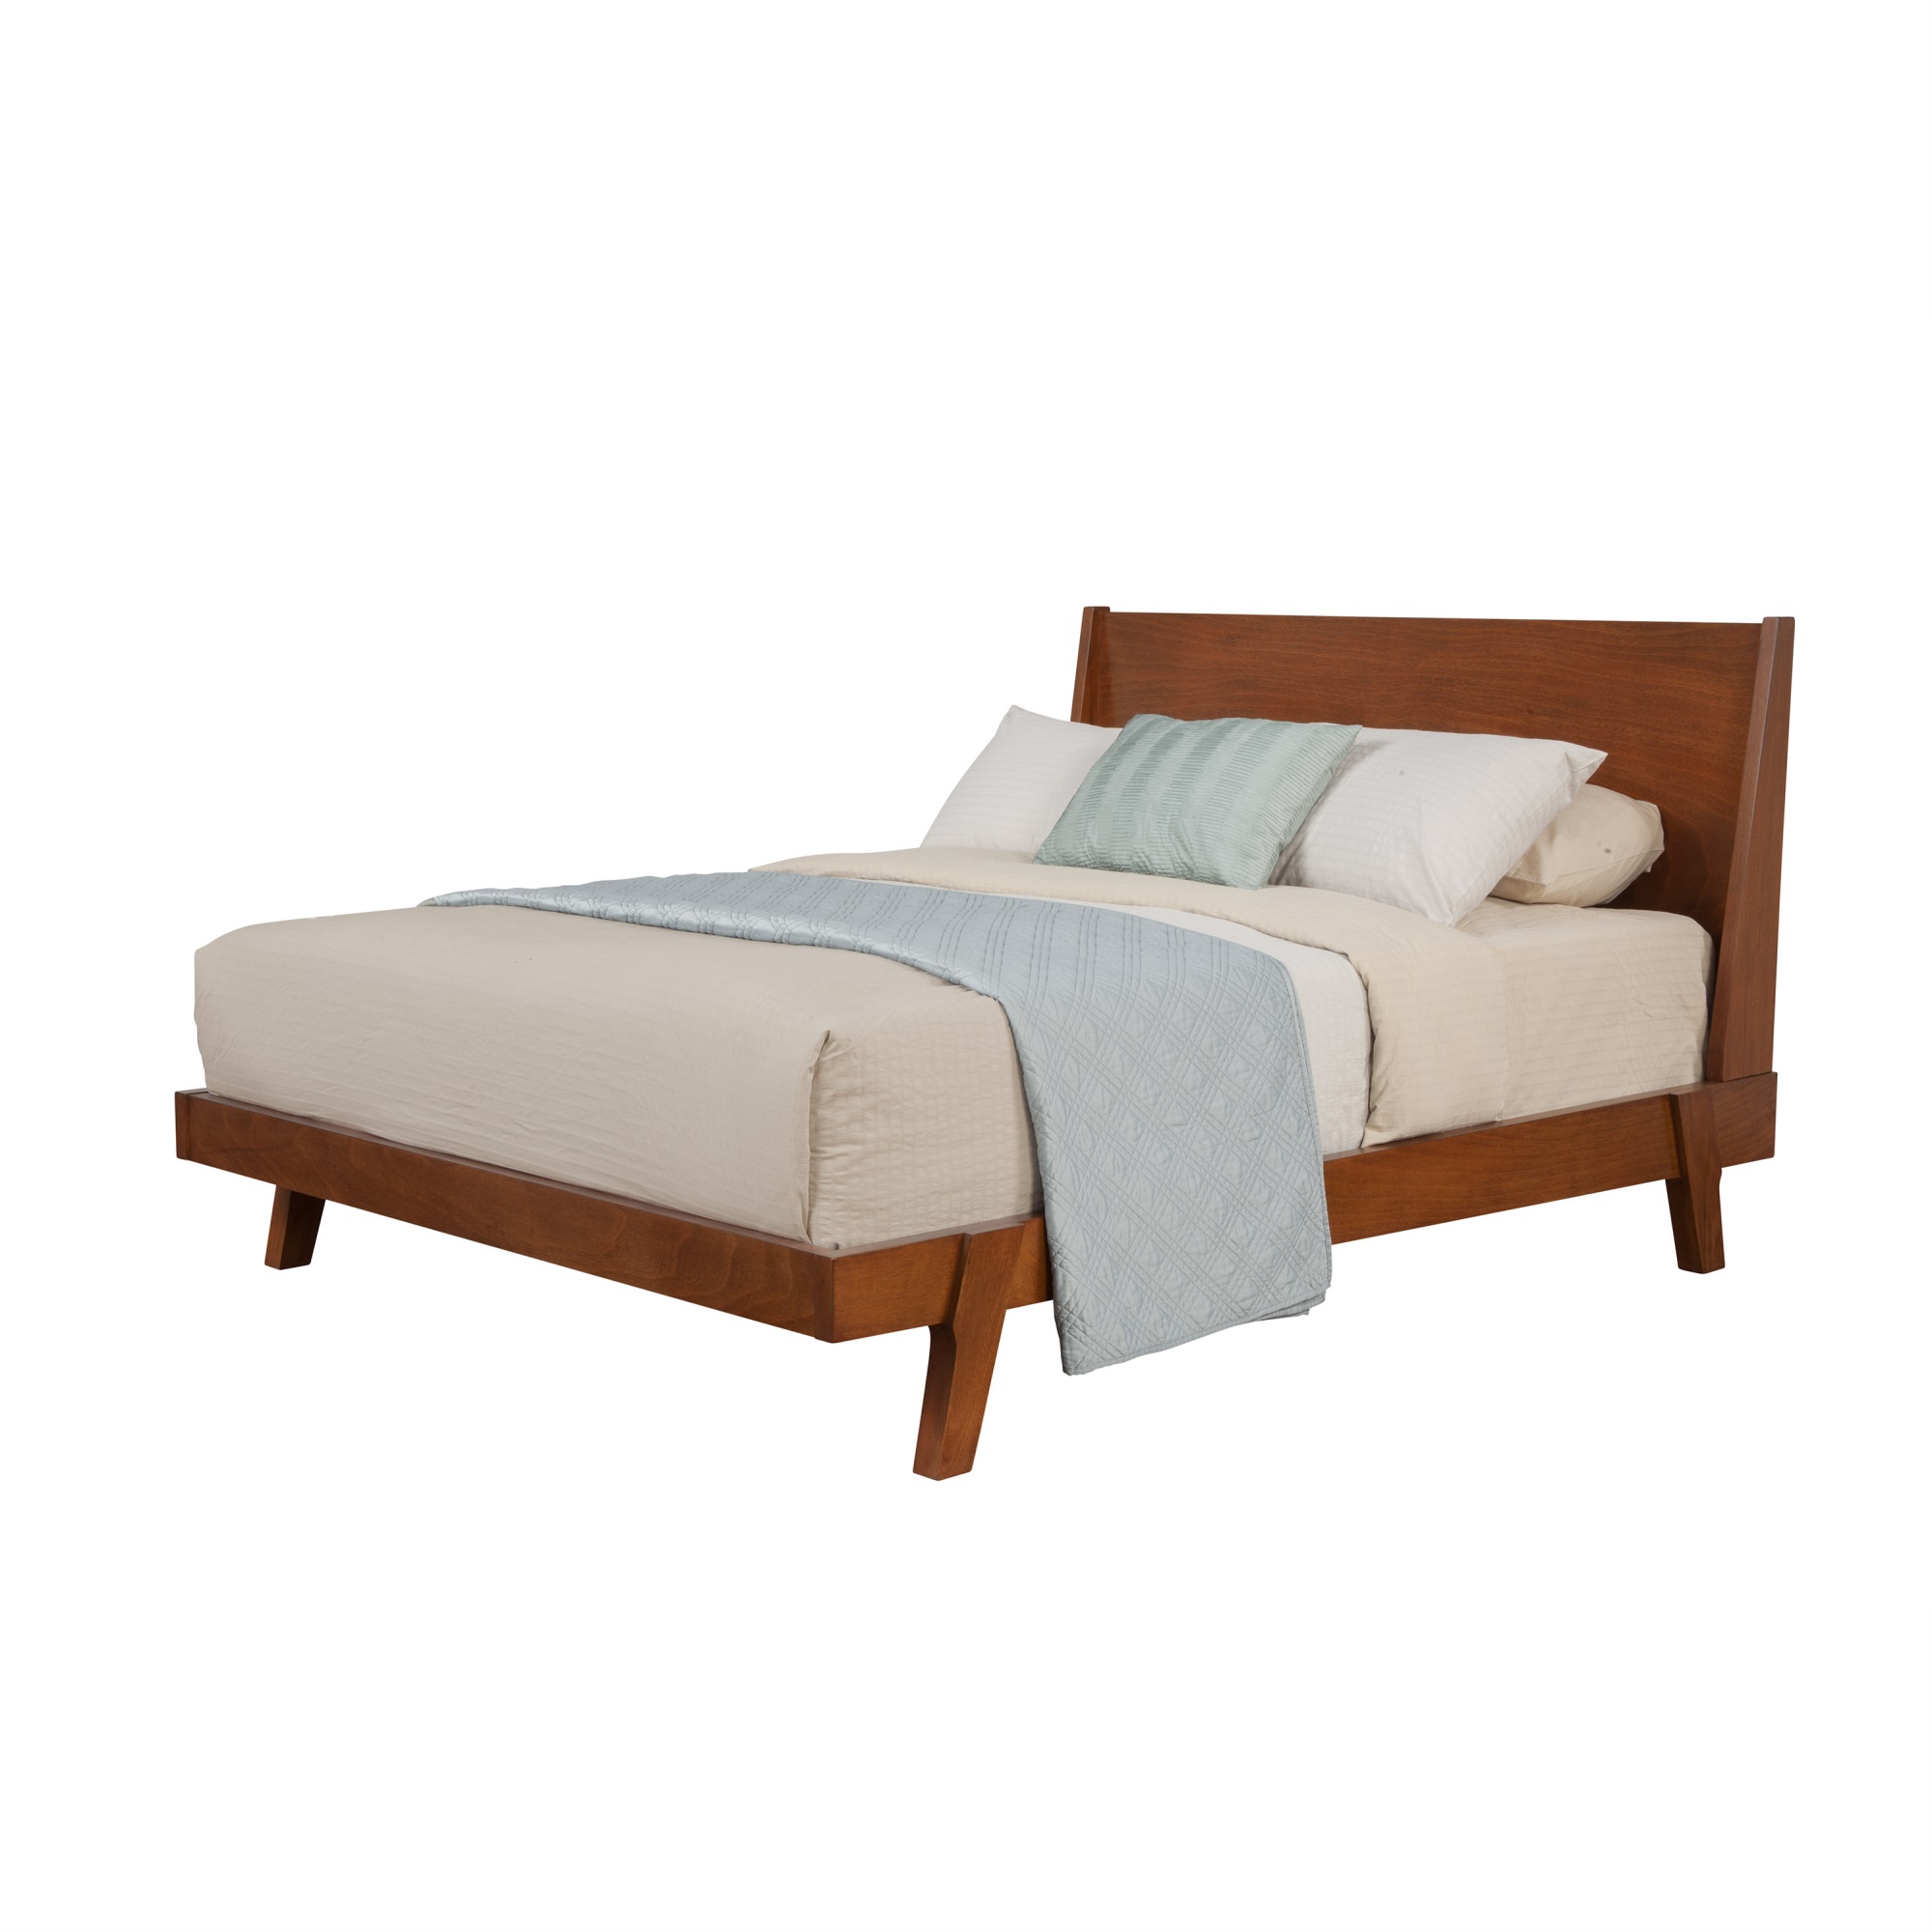 IDEAZ International LLC 1386APB Brown Sophisticated Full Size Platform Bed